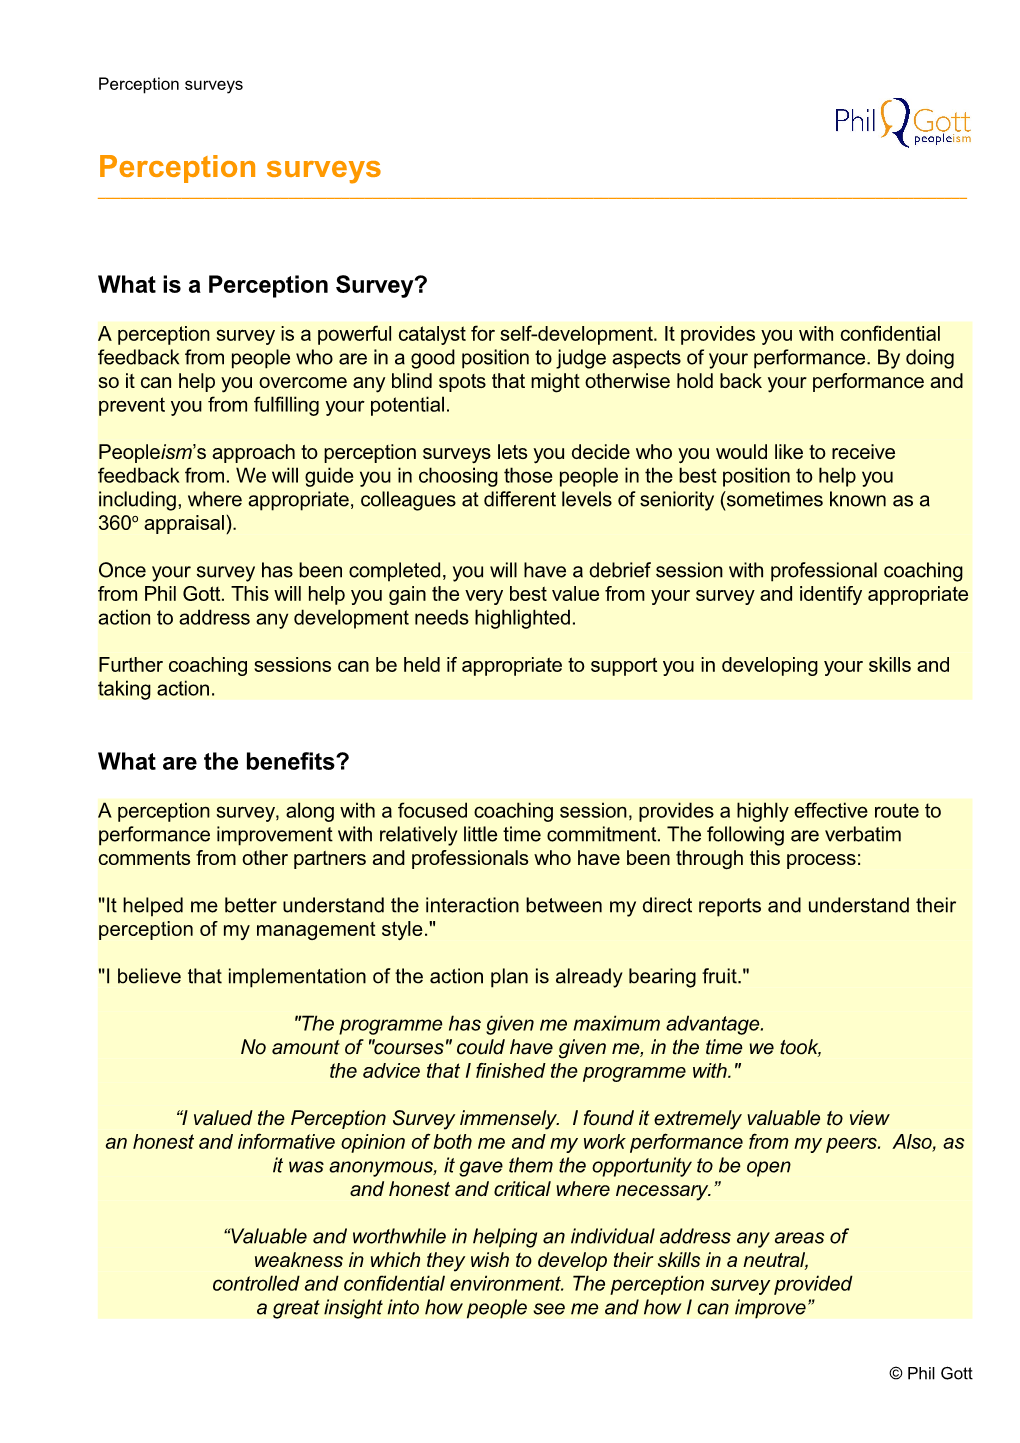 Perception Surveys